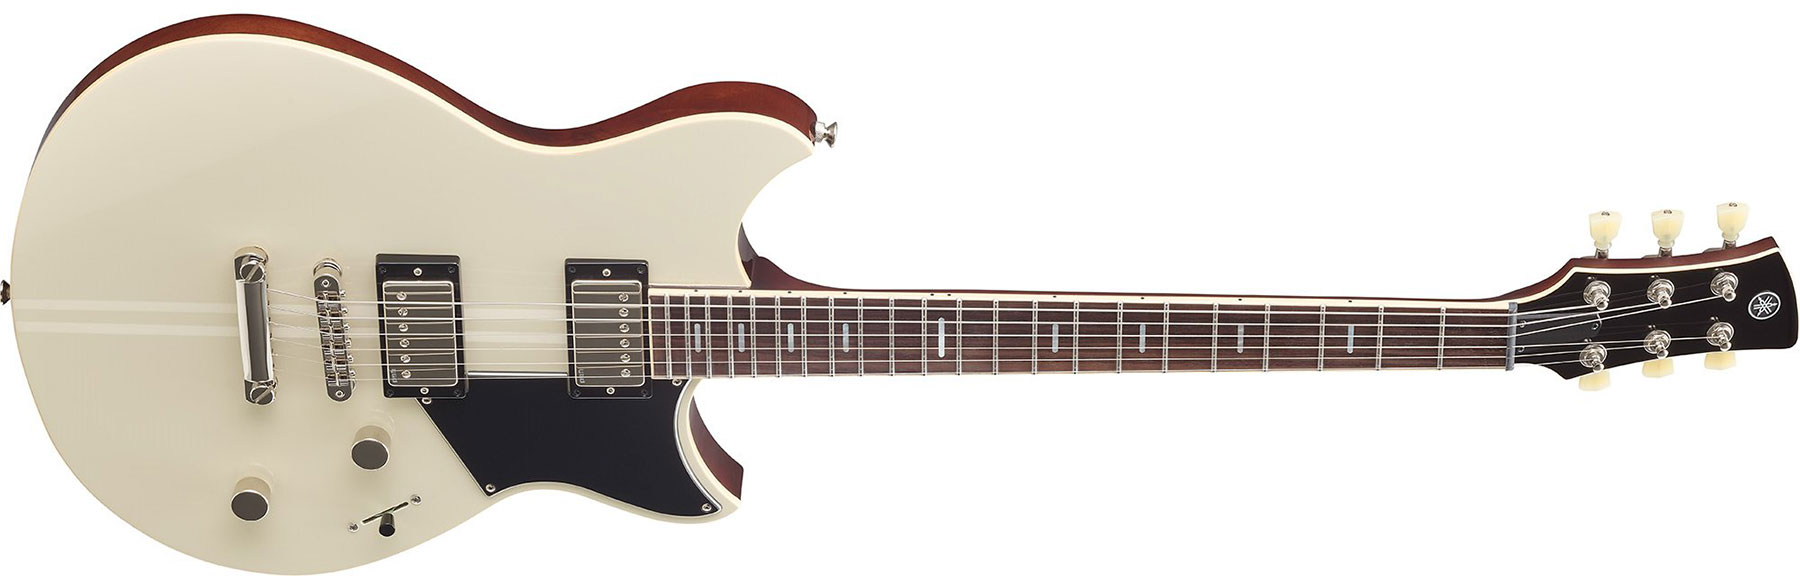 Yamaha Rss20 Revstar Standard Hh Ht Rw - Vintage White - Double cut electric guitar - Variation 1